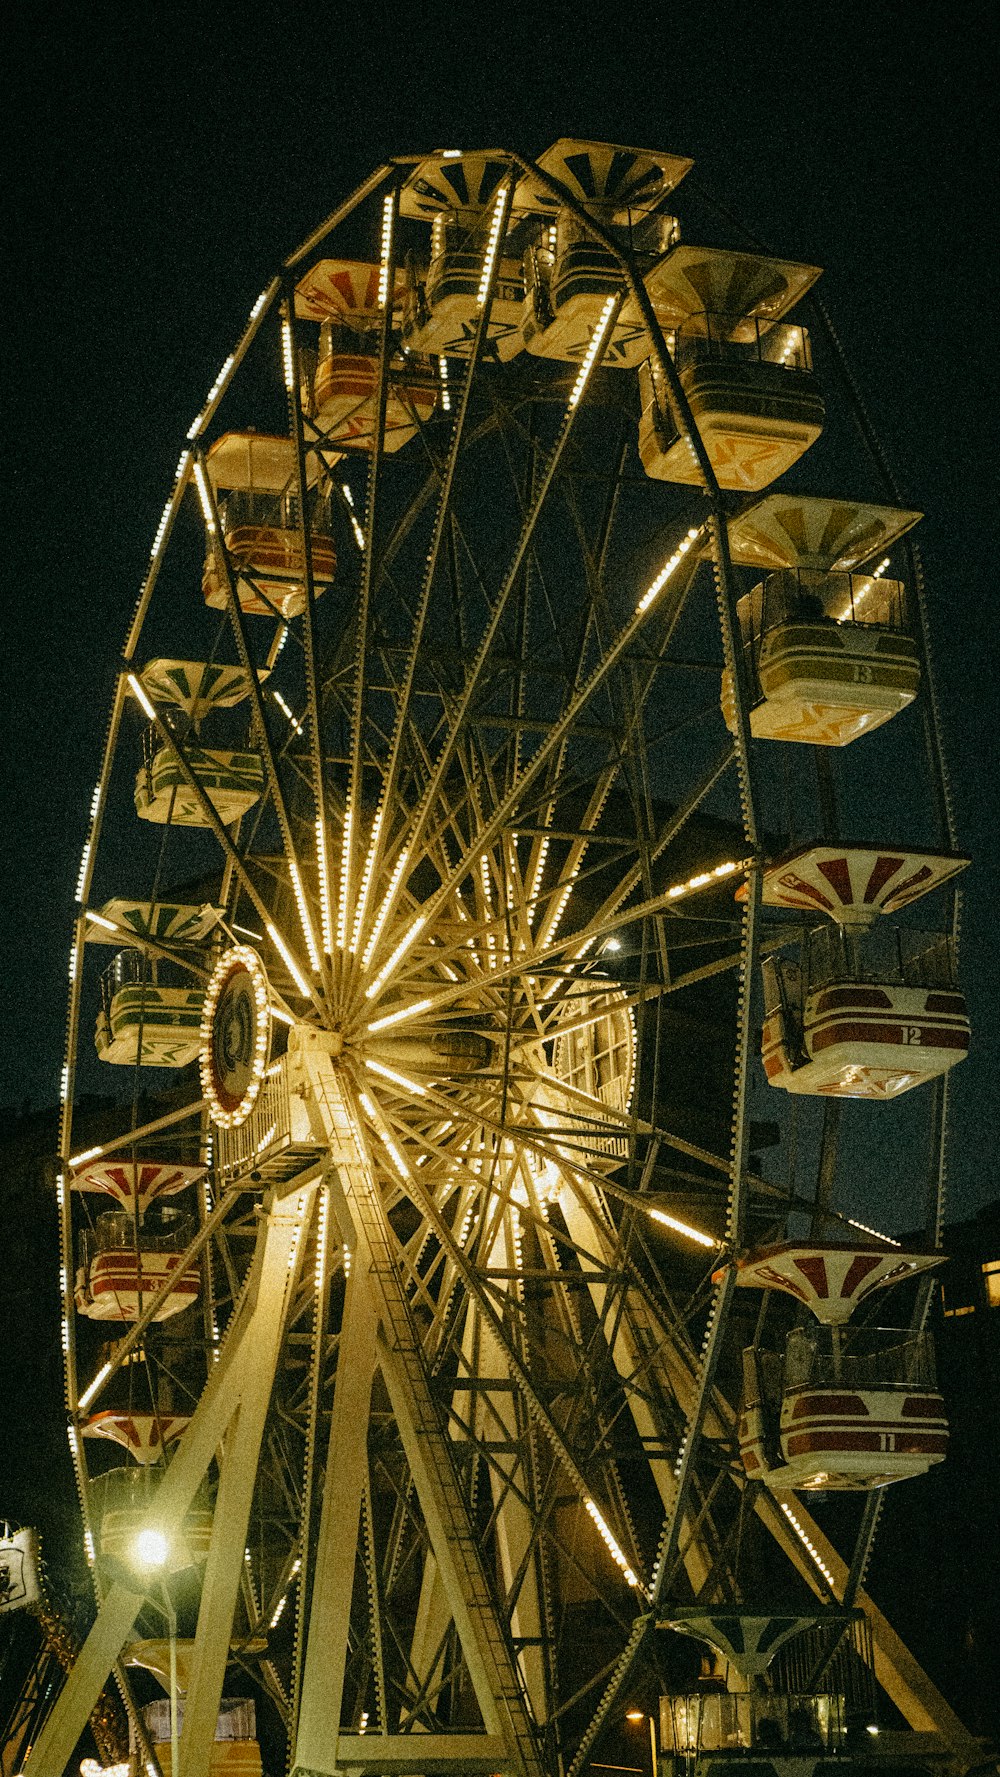 una ruota panoramica illuminata di notte